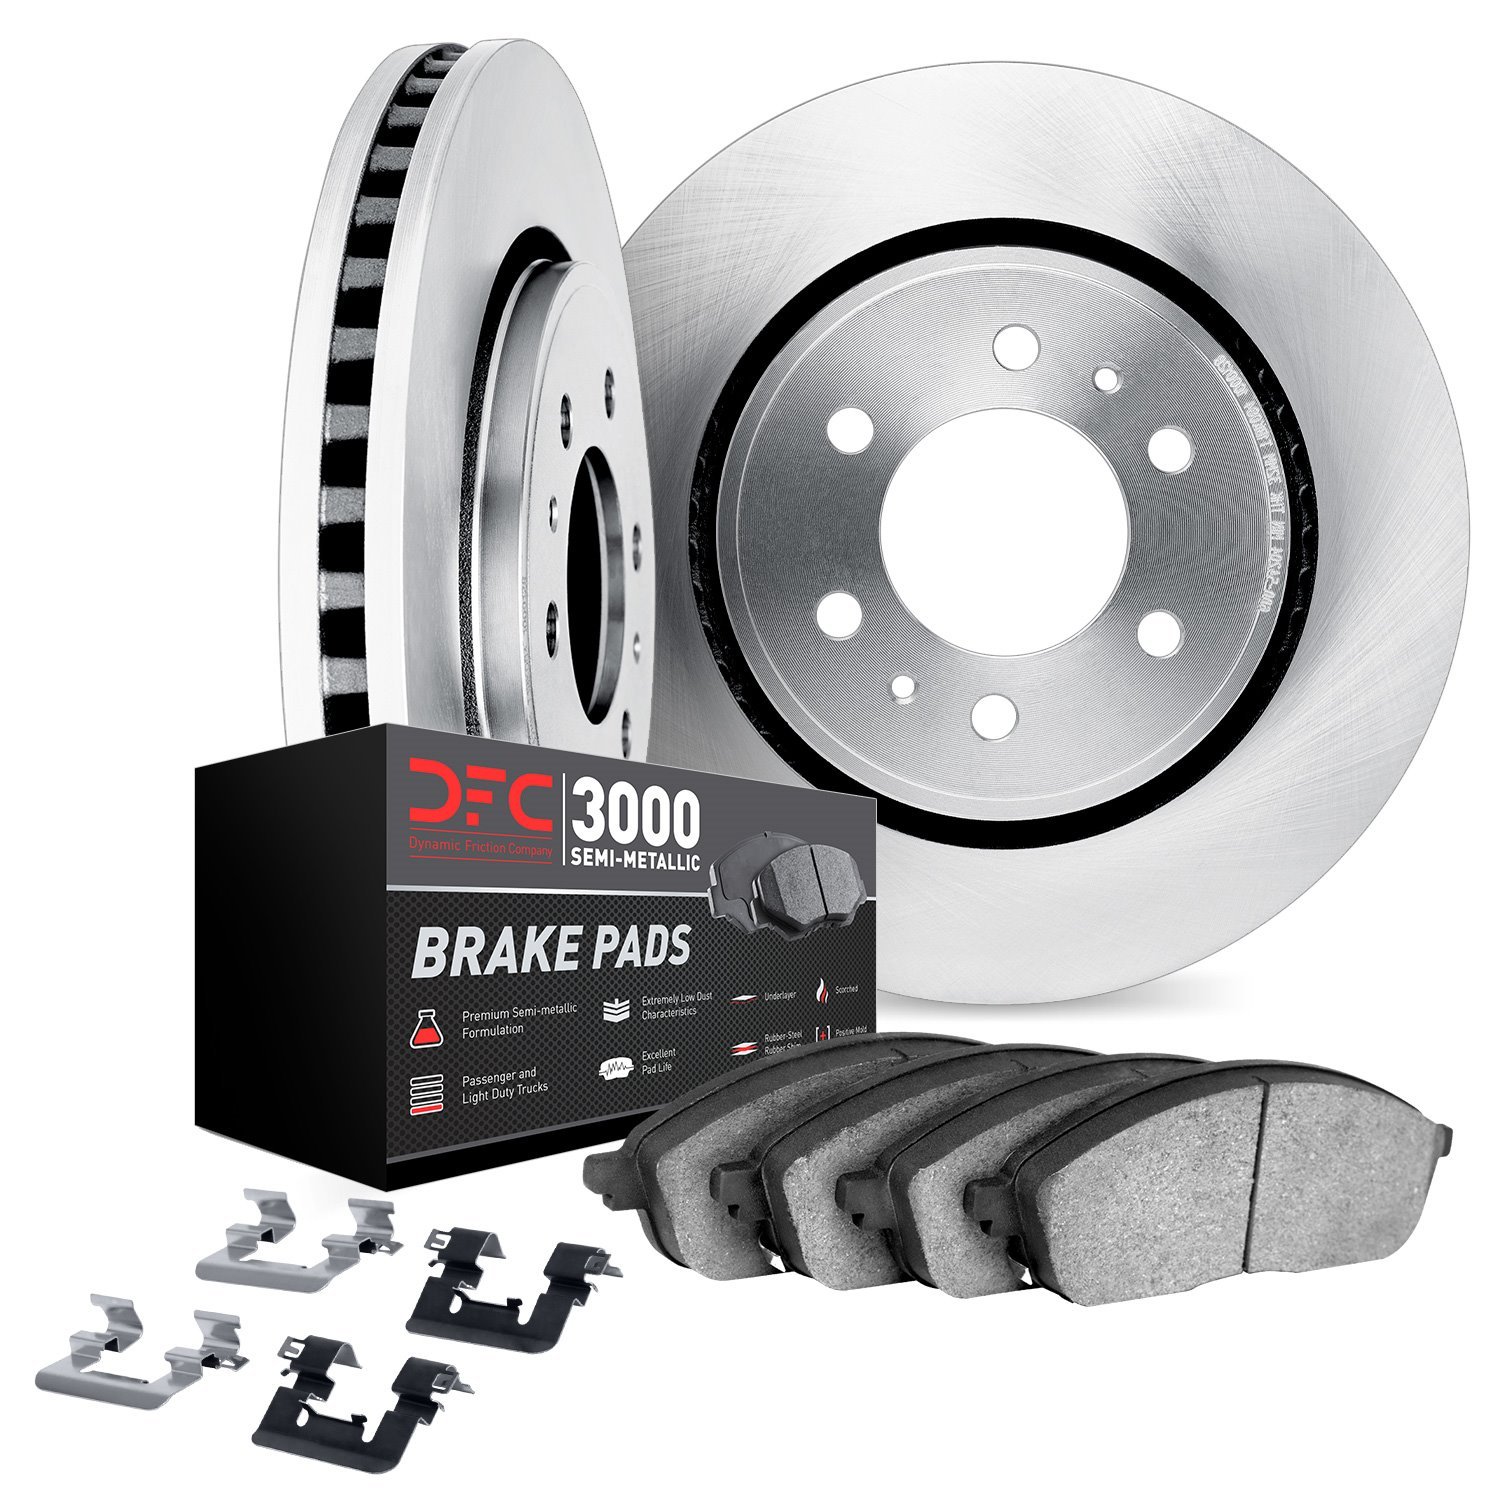 5112-67123 Slotted Brake Rotors with 3000-Series Semi-Metallic Brake Pads Kit & Hardware [Silver], Fits Select Infiniti/Nissan,